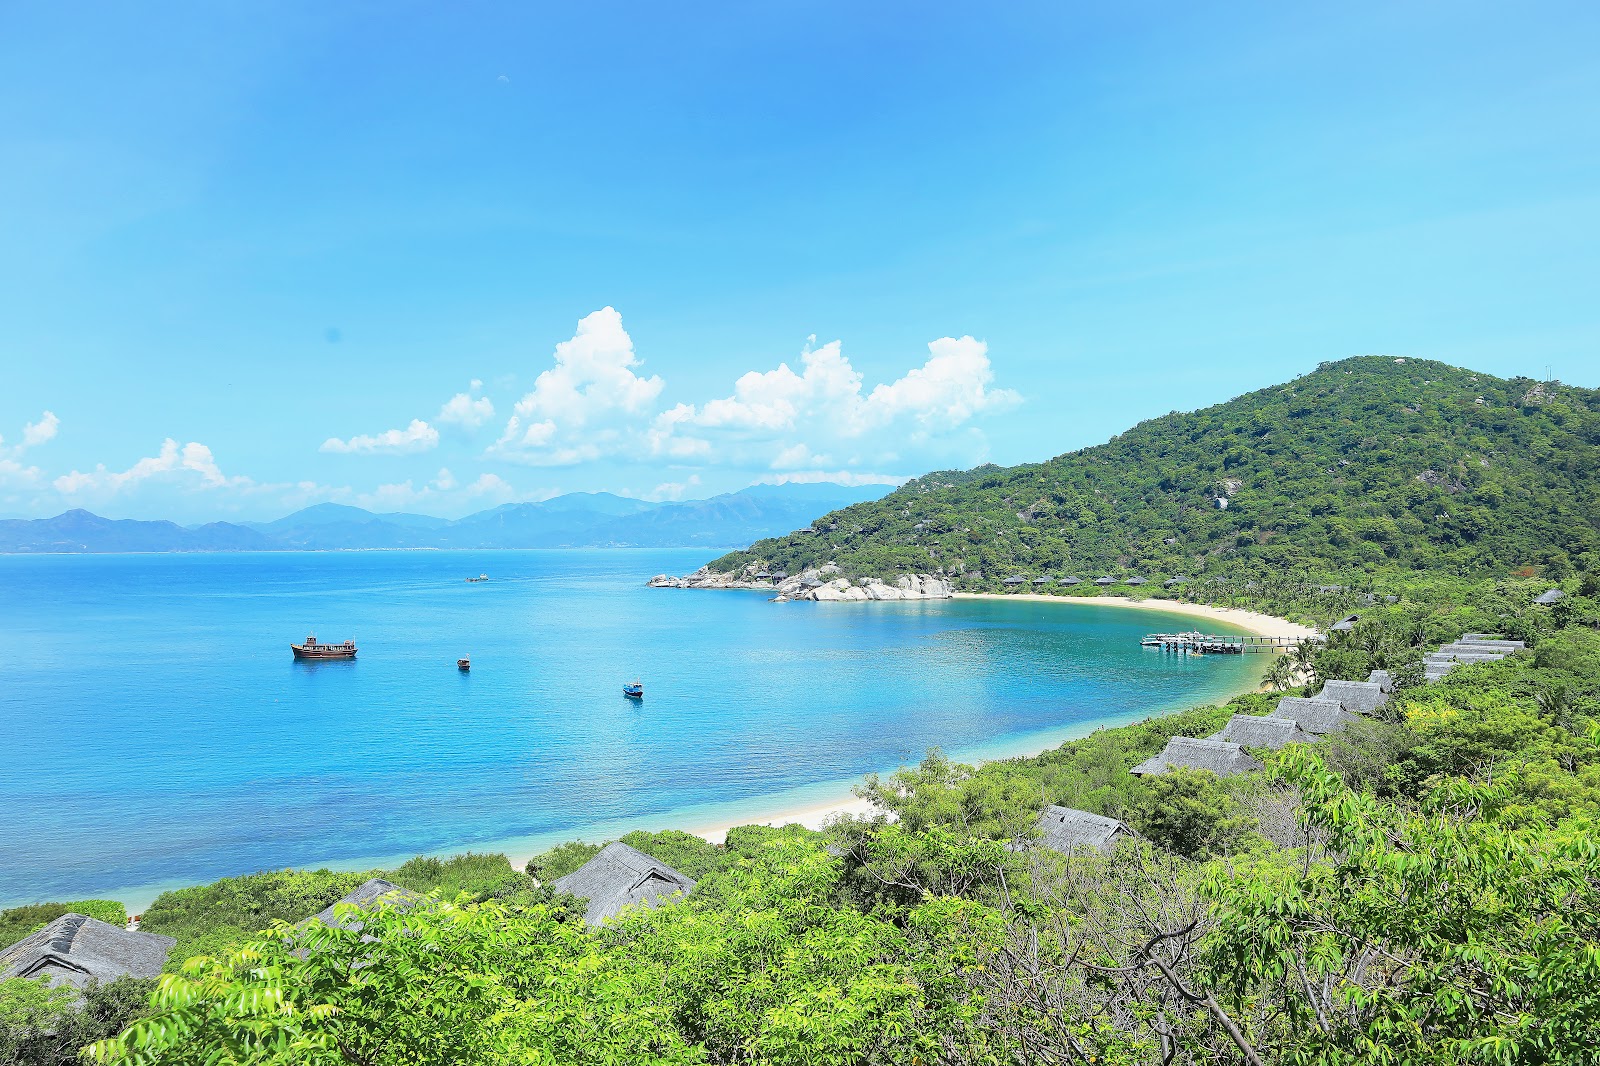 Photo of Six Senses Ninh Van Bay Beach - popular place among relax connoisseurs